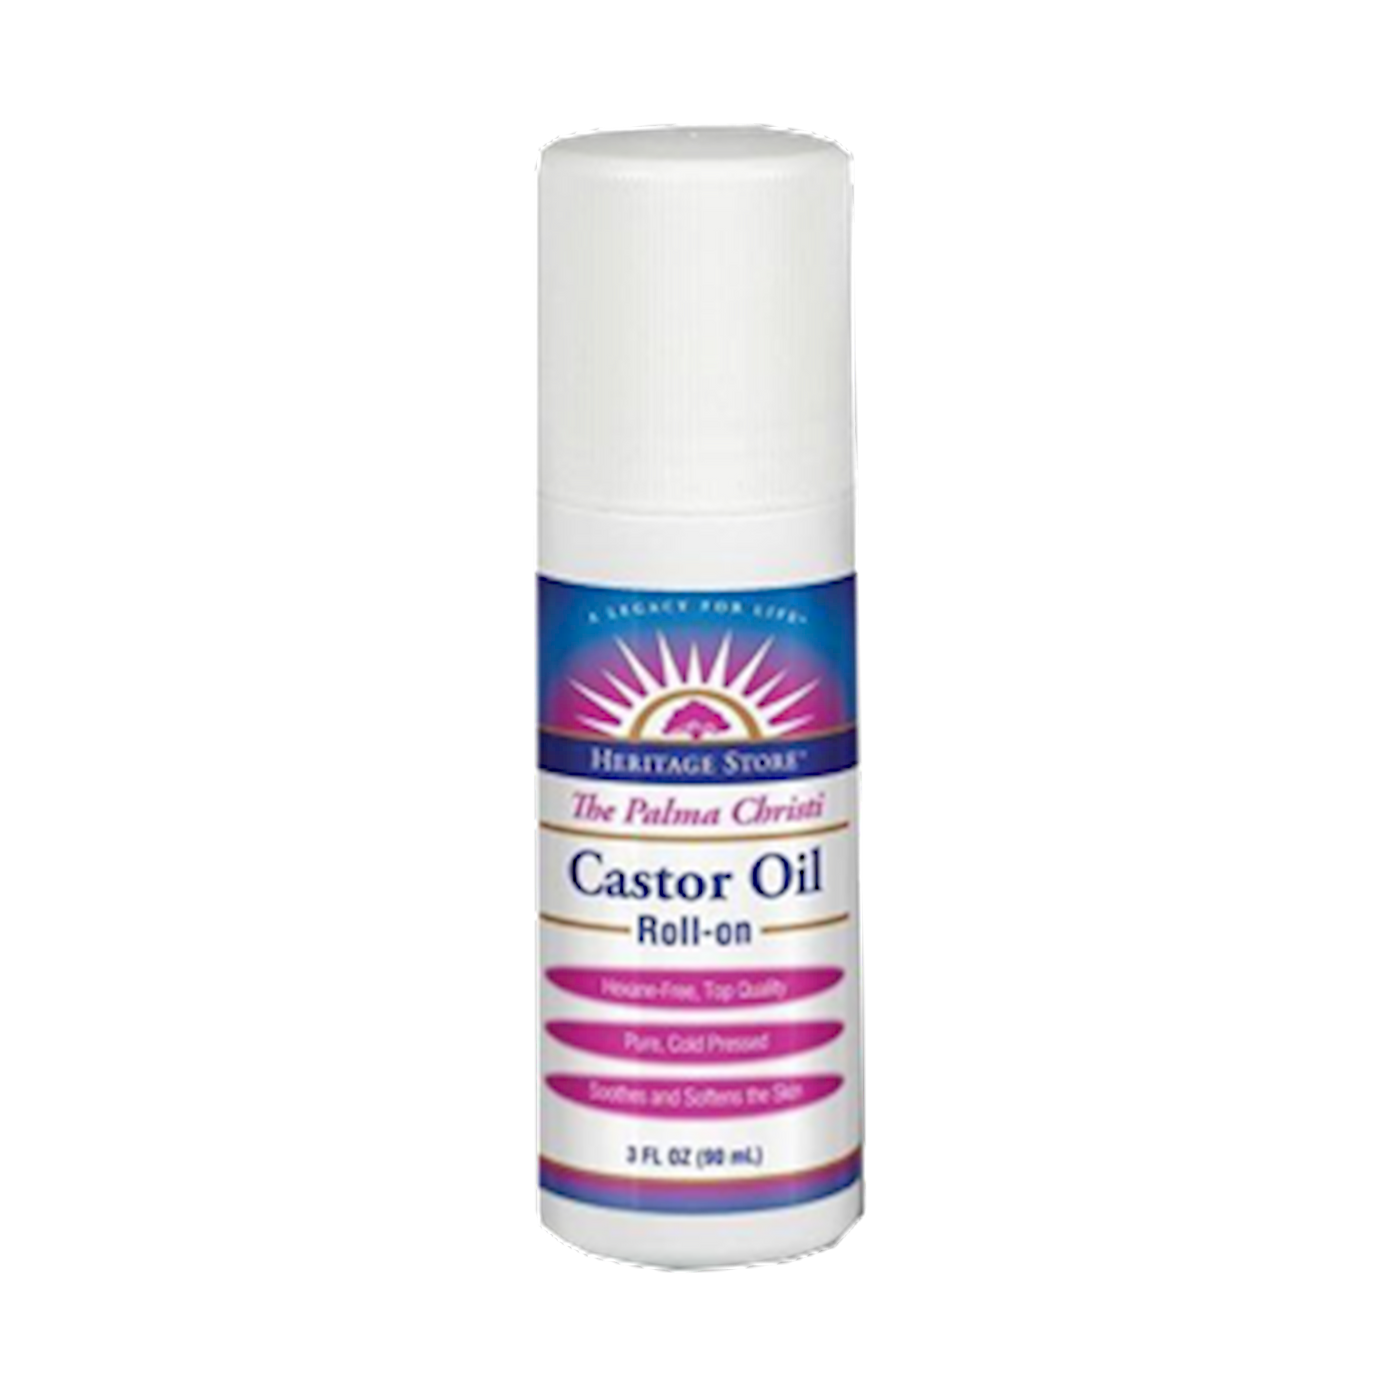 Castor Oil Roll-on 3 fl oz Curated Wellness